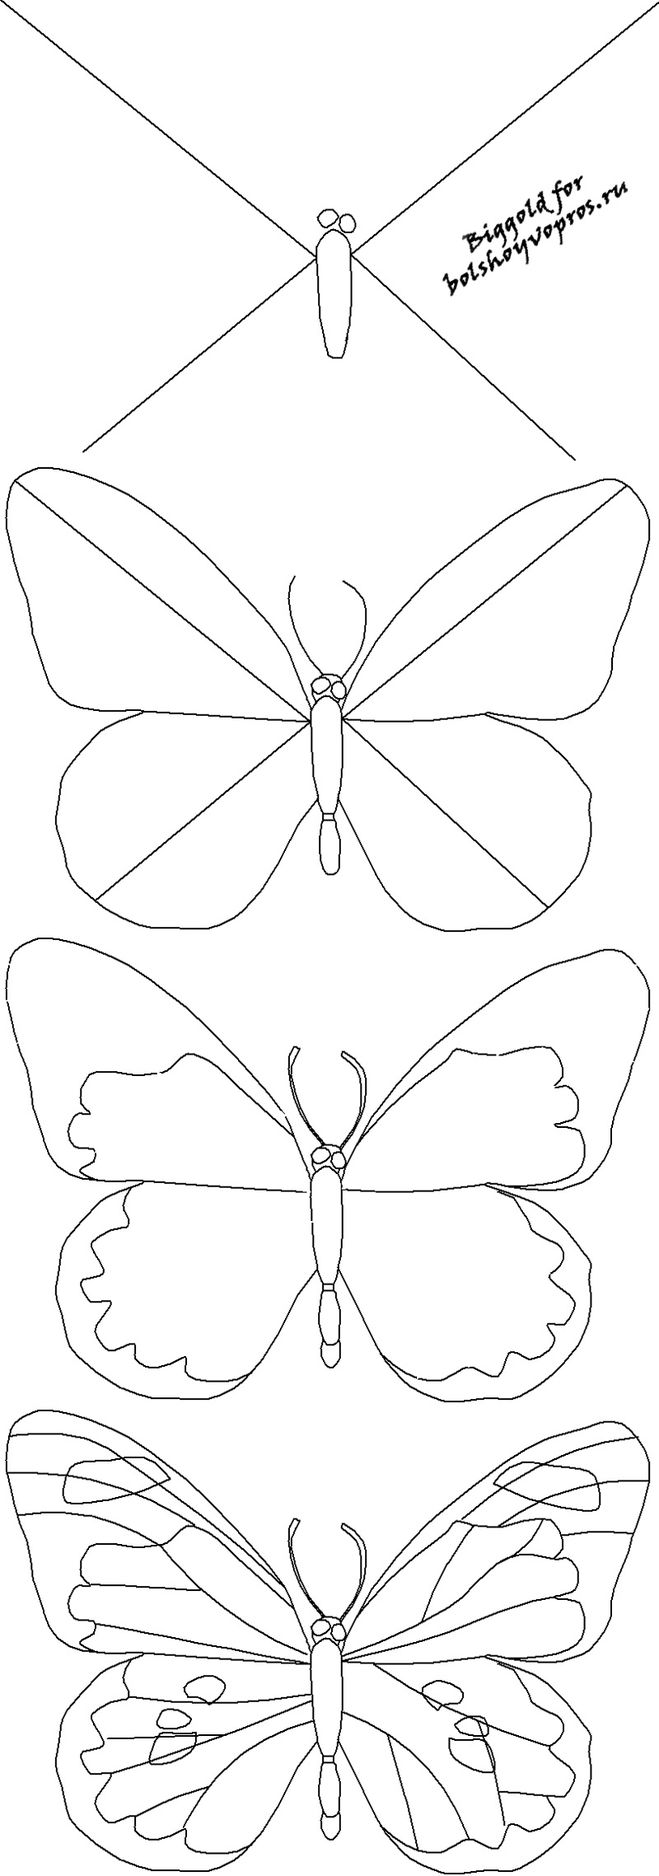 Схематичный рисунок бабочки